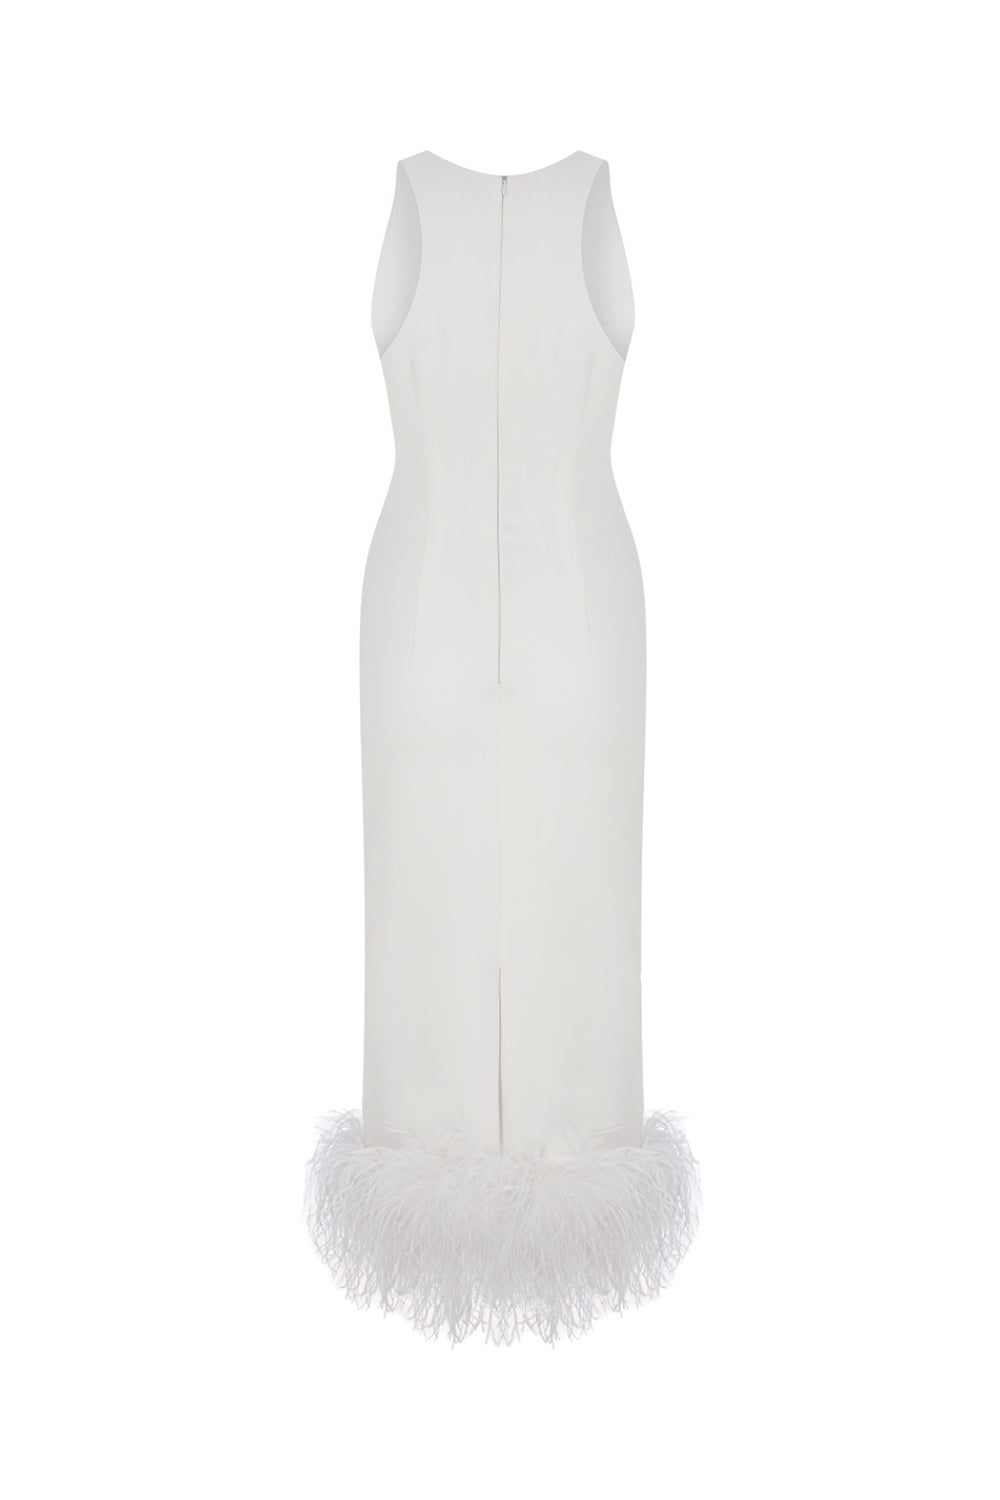 Puri - White Midi Dress With Feather Trim